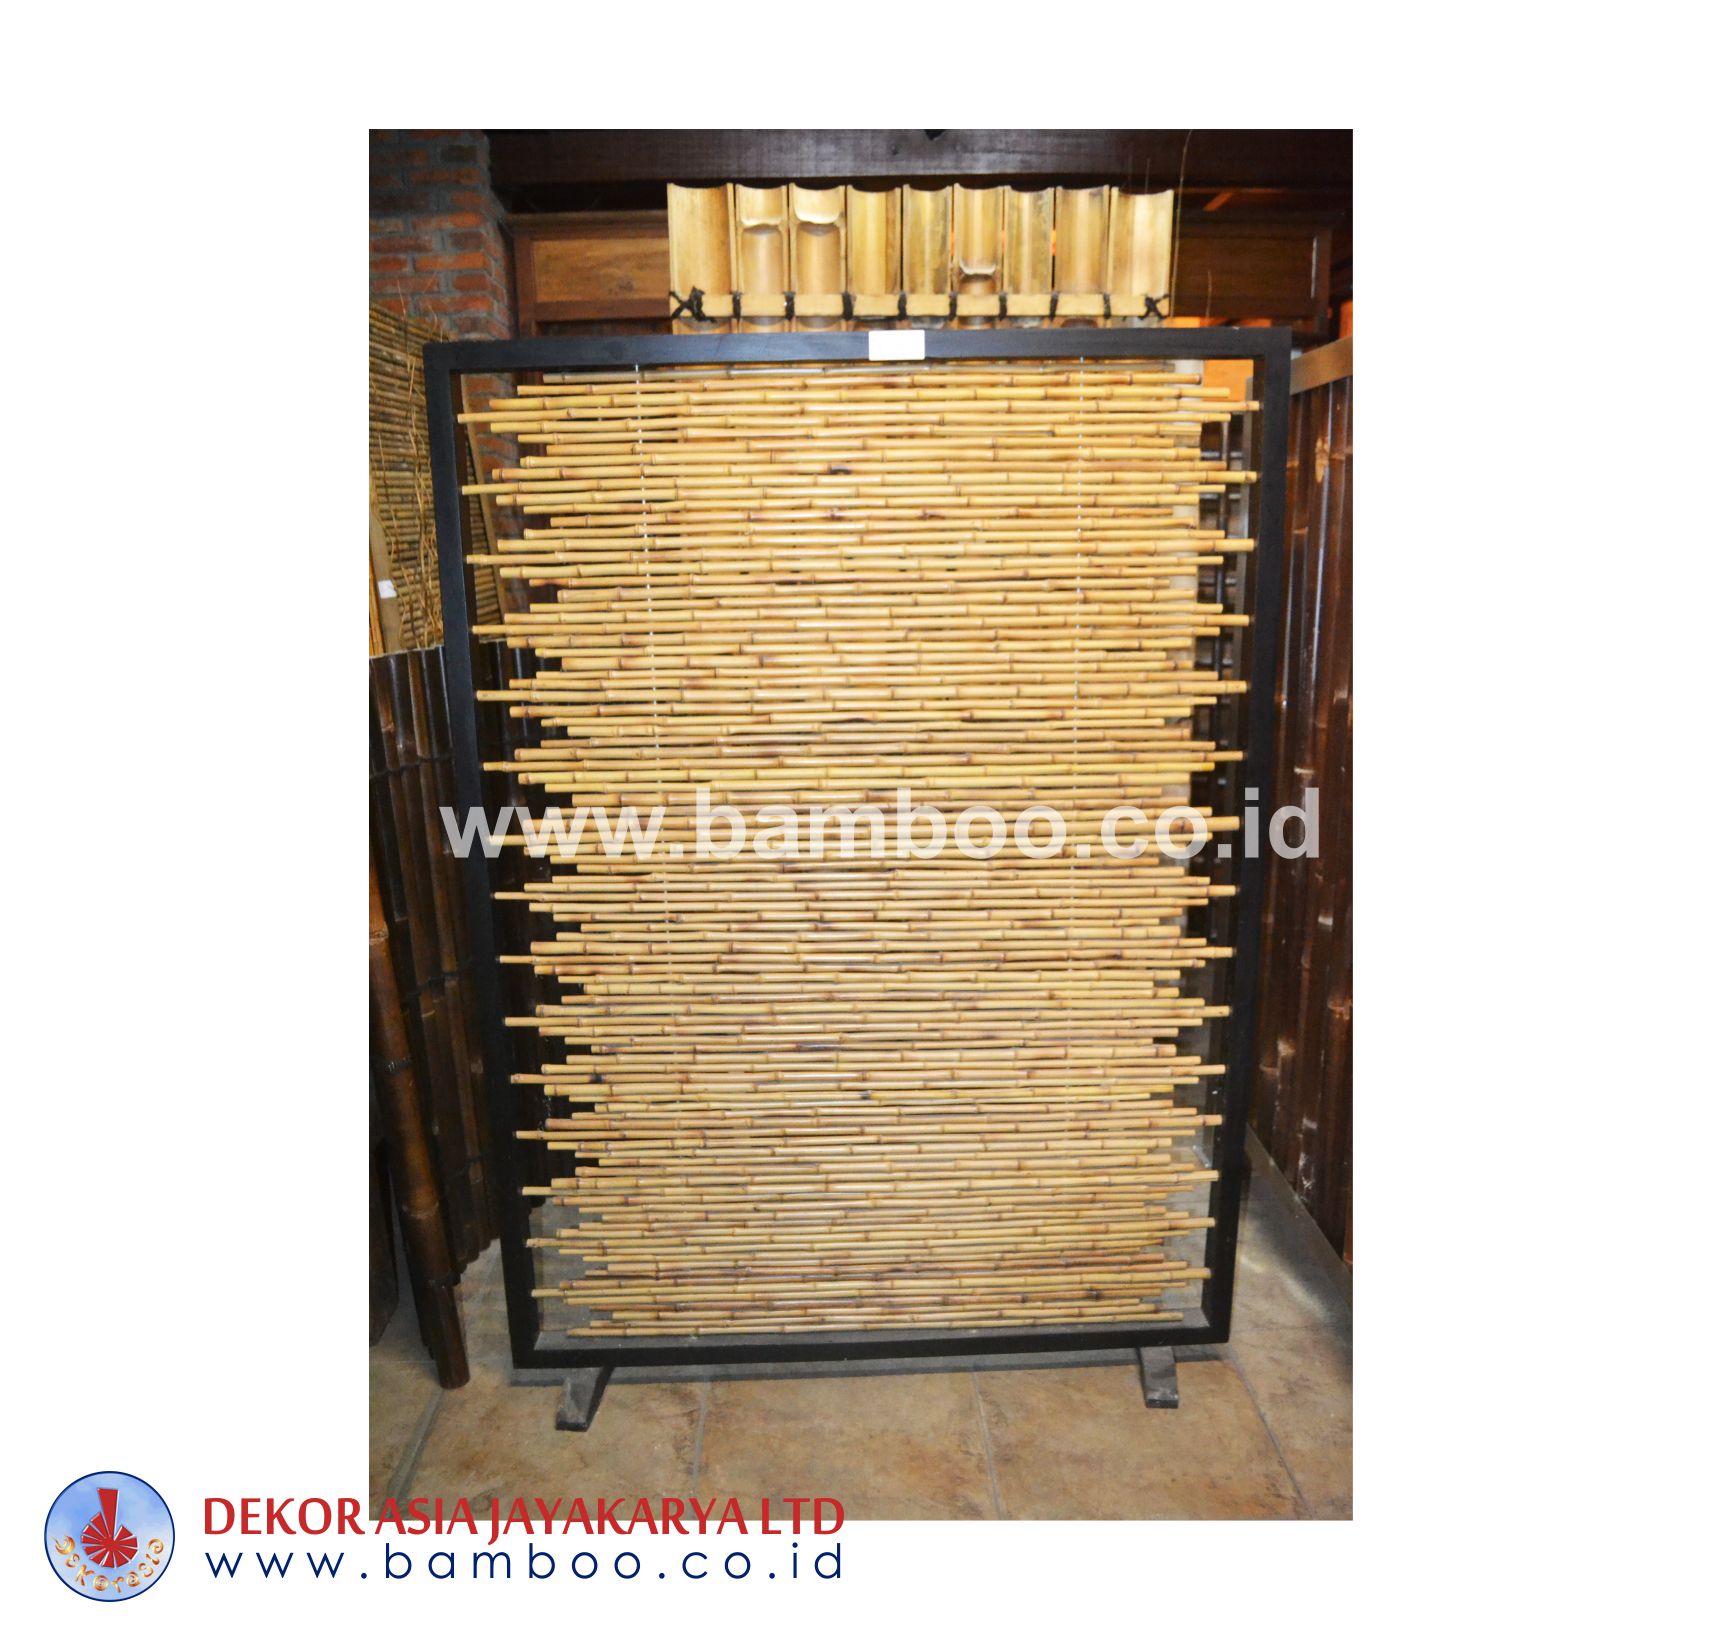 Bamboo Cendani Frame With Wood